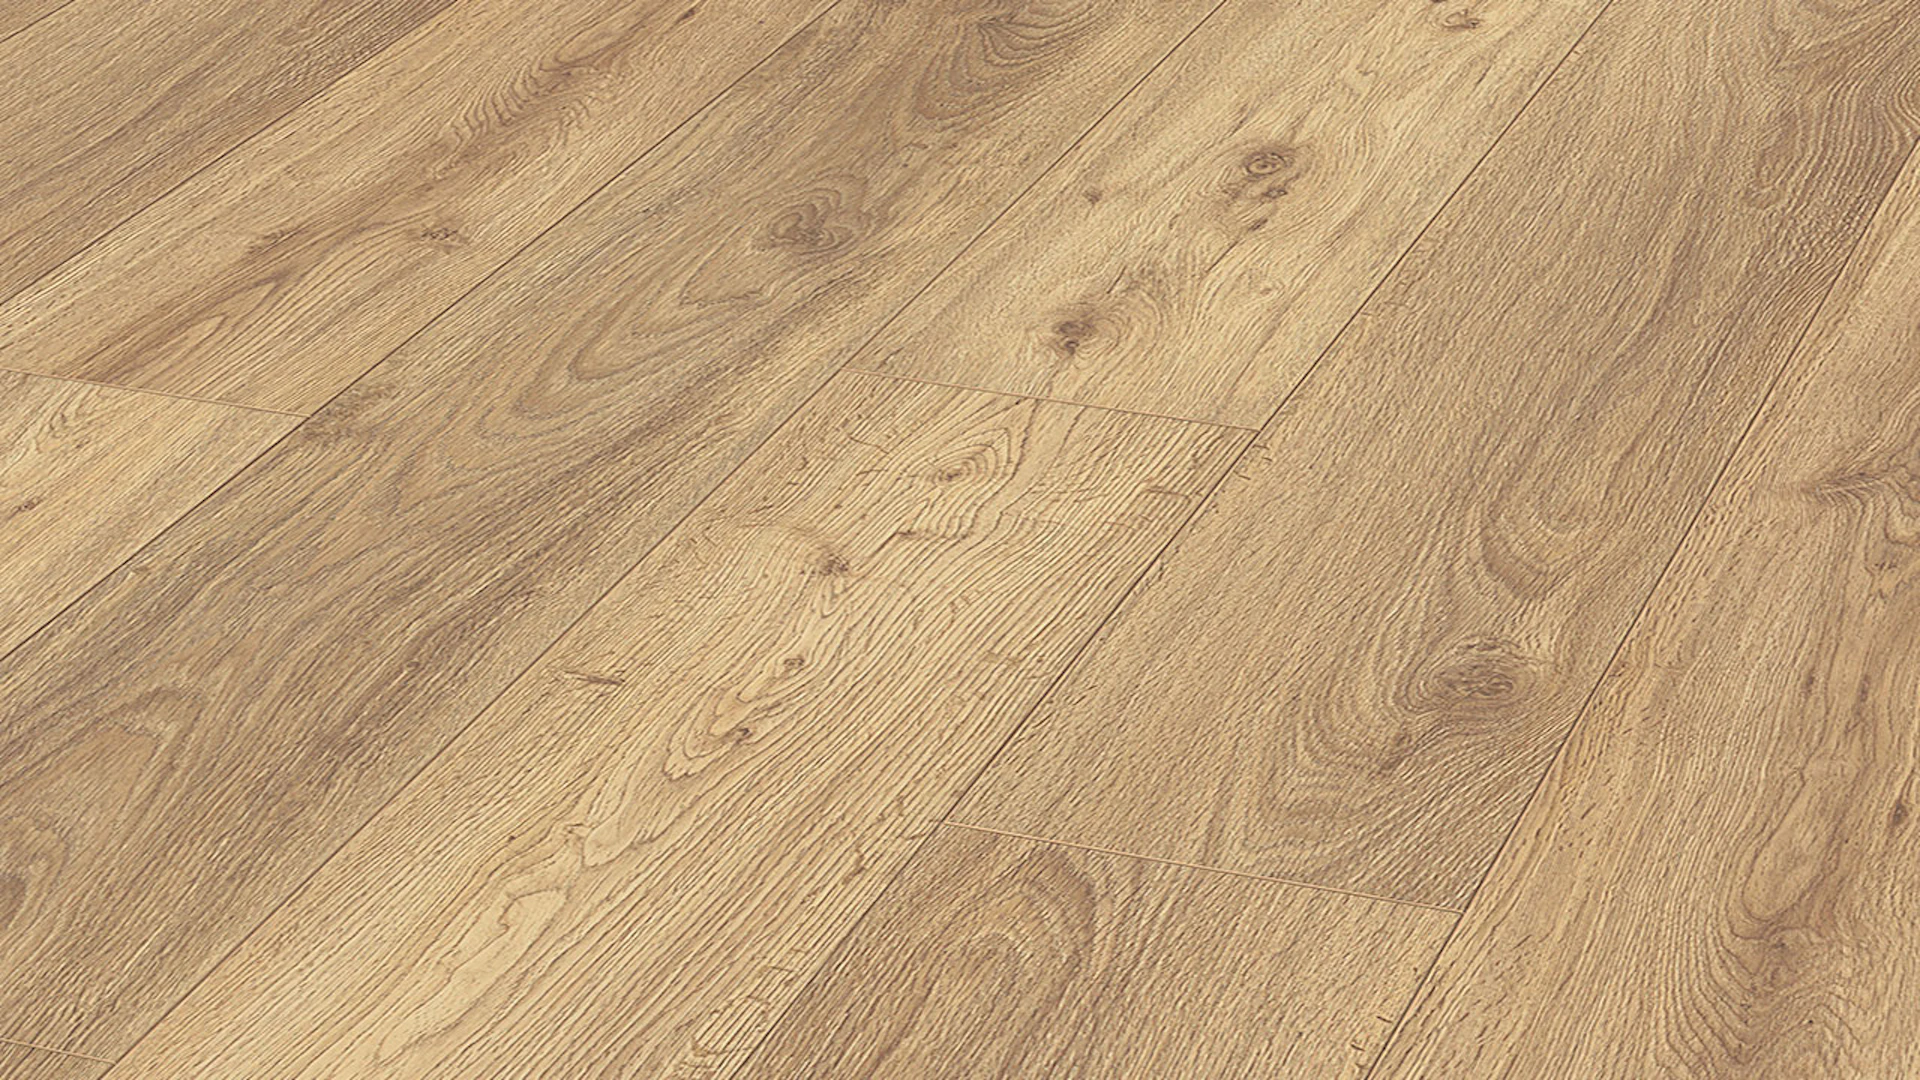 MEISTER Laminate flooring - MeisterDesign LD 150 Oak Chiemsee light 6376 (600017-1288198-06376)